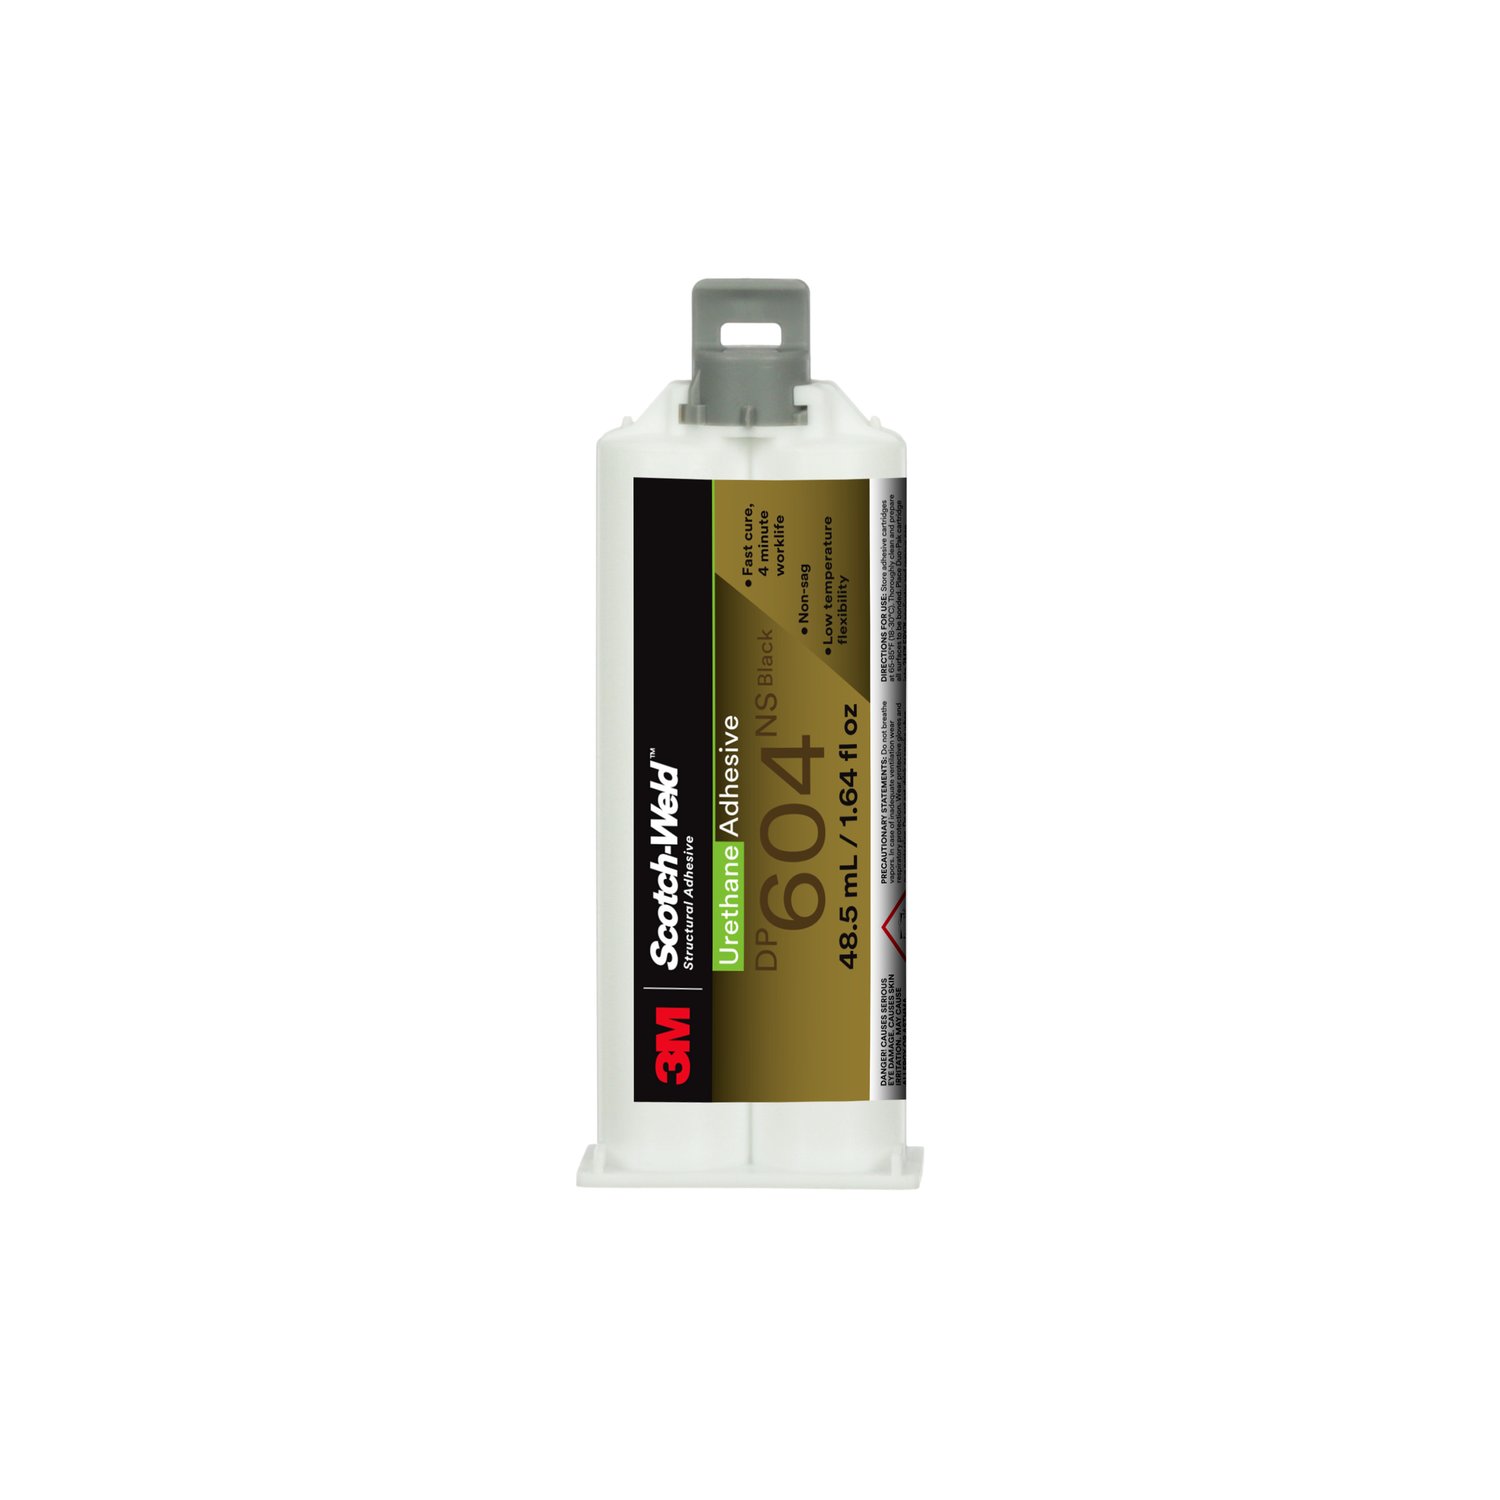 7100148738 - 3M Scotch-Weld Urethane Adhesive DP604NS, Black, 48.5 mL Duo-Pak,
12/Case